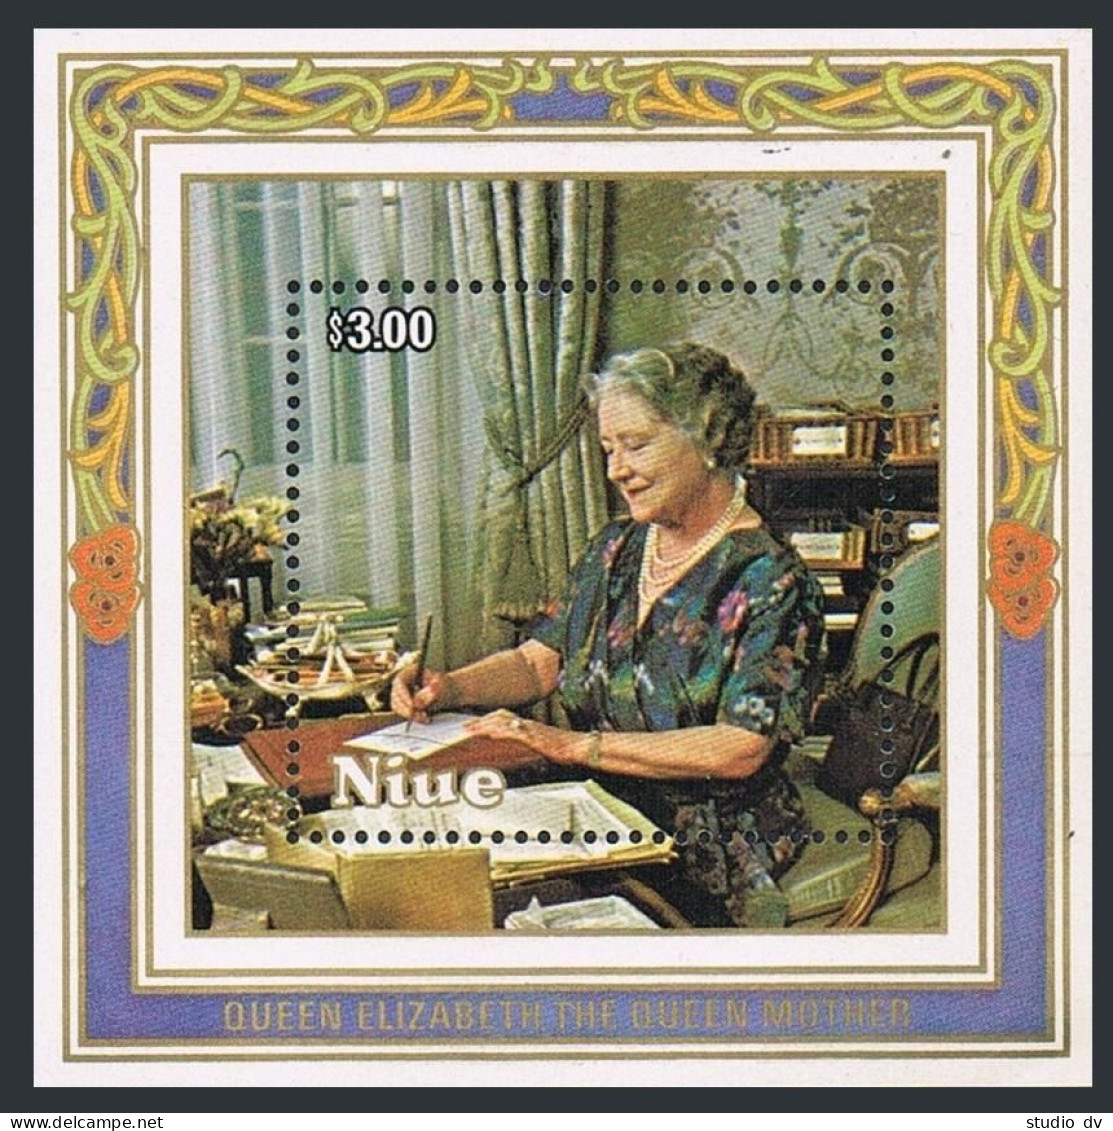 Niue 476-478,478a,479 Sheets,MNH.Mi 618-621 Klb. Queen Mother,85th Birthday.1985 - Niue